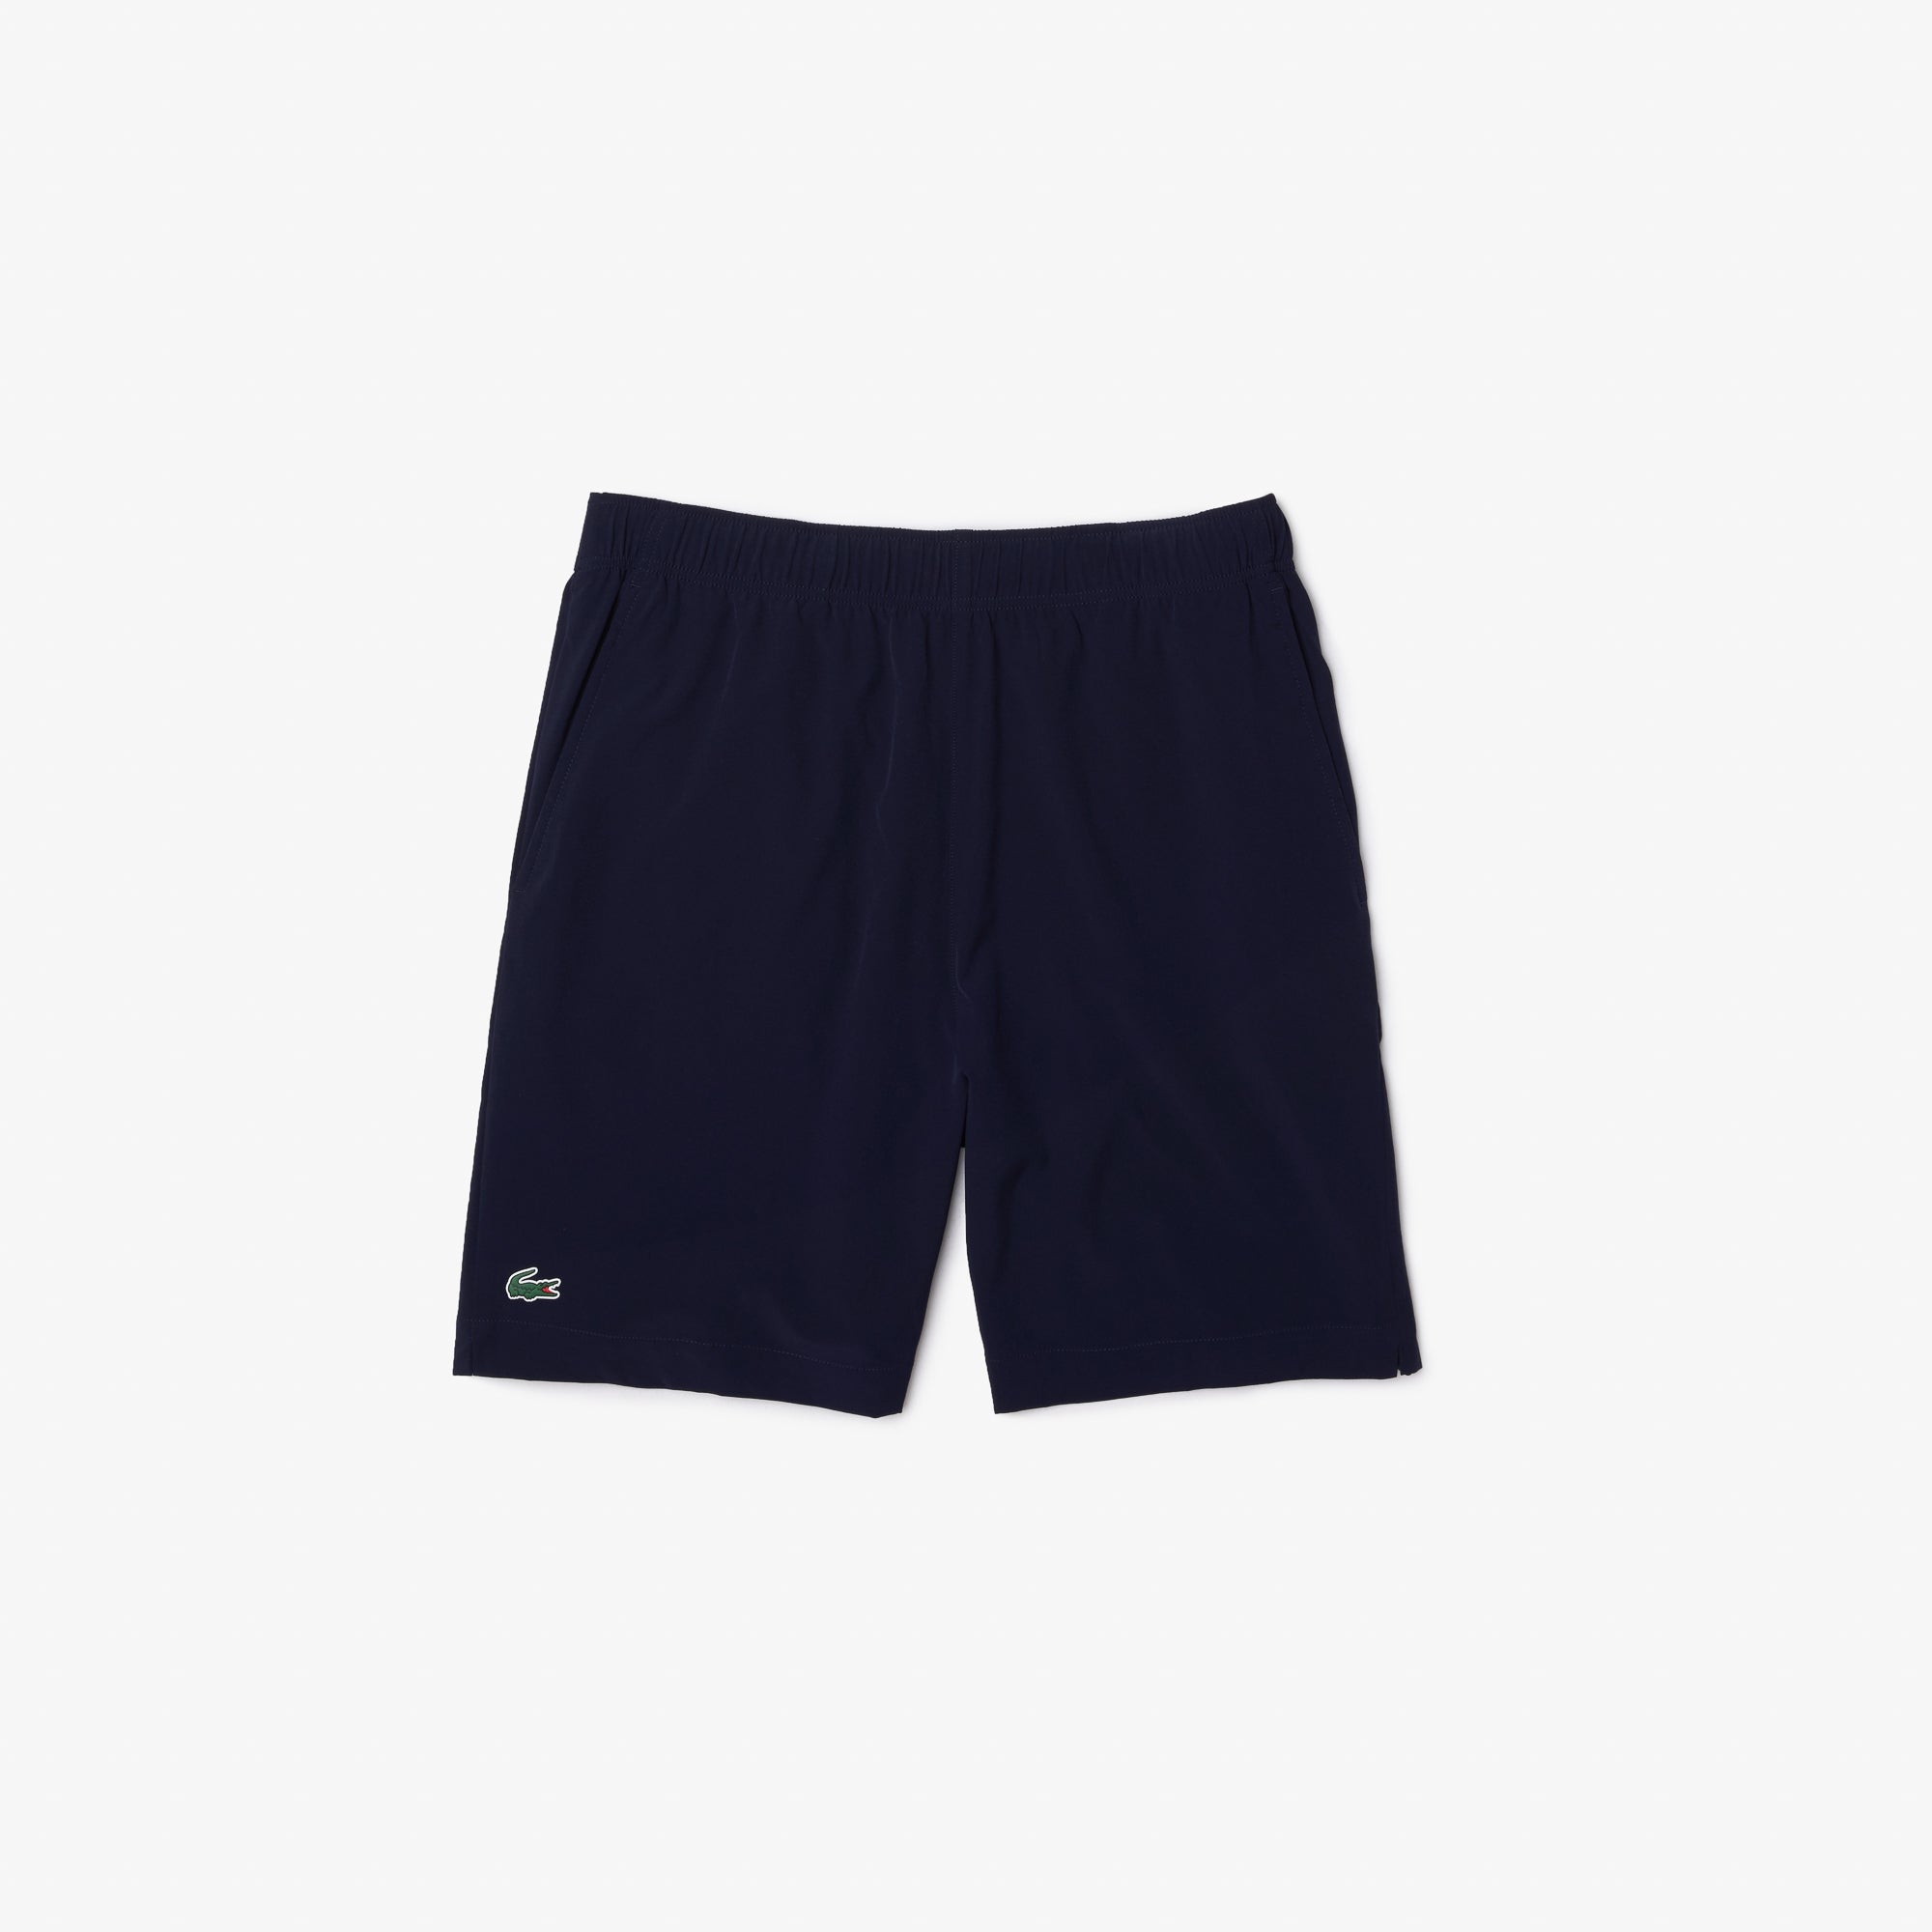 Se Lacoste Shorts (Navy) - M hos Padellife